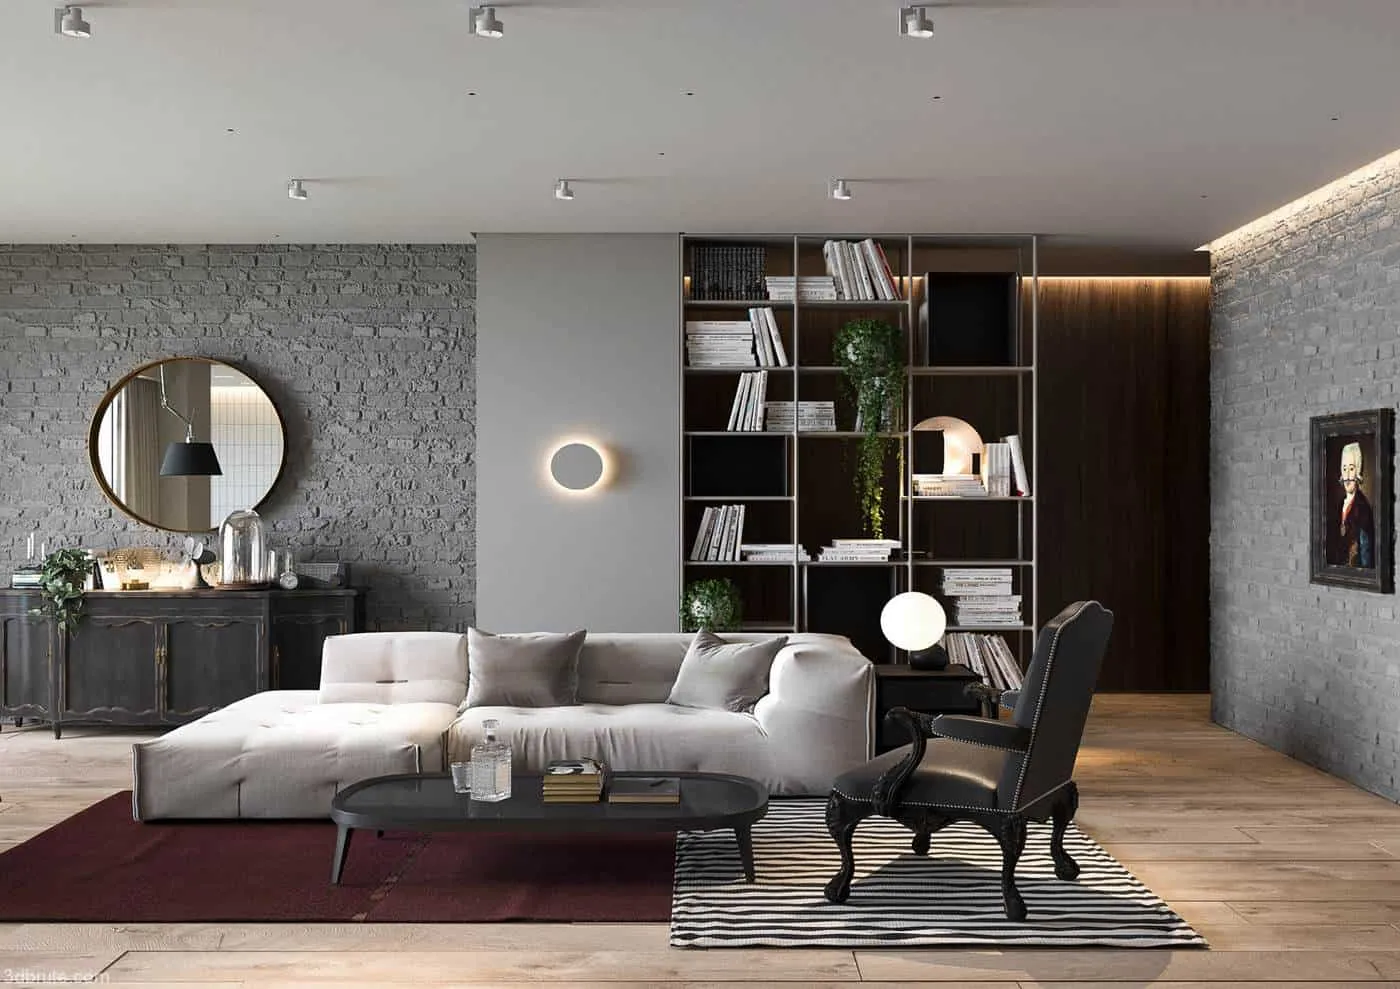 olourful living room decor with bookshelf on wall design